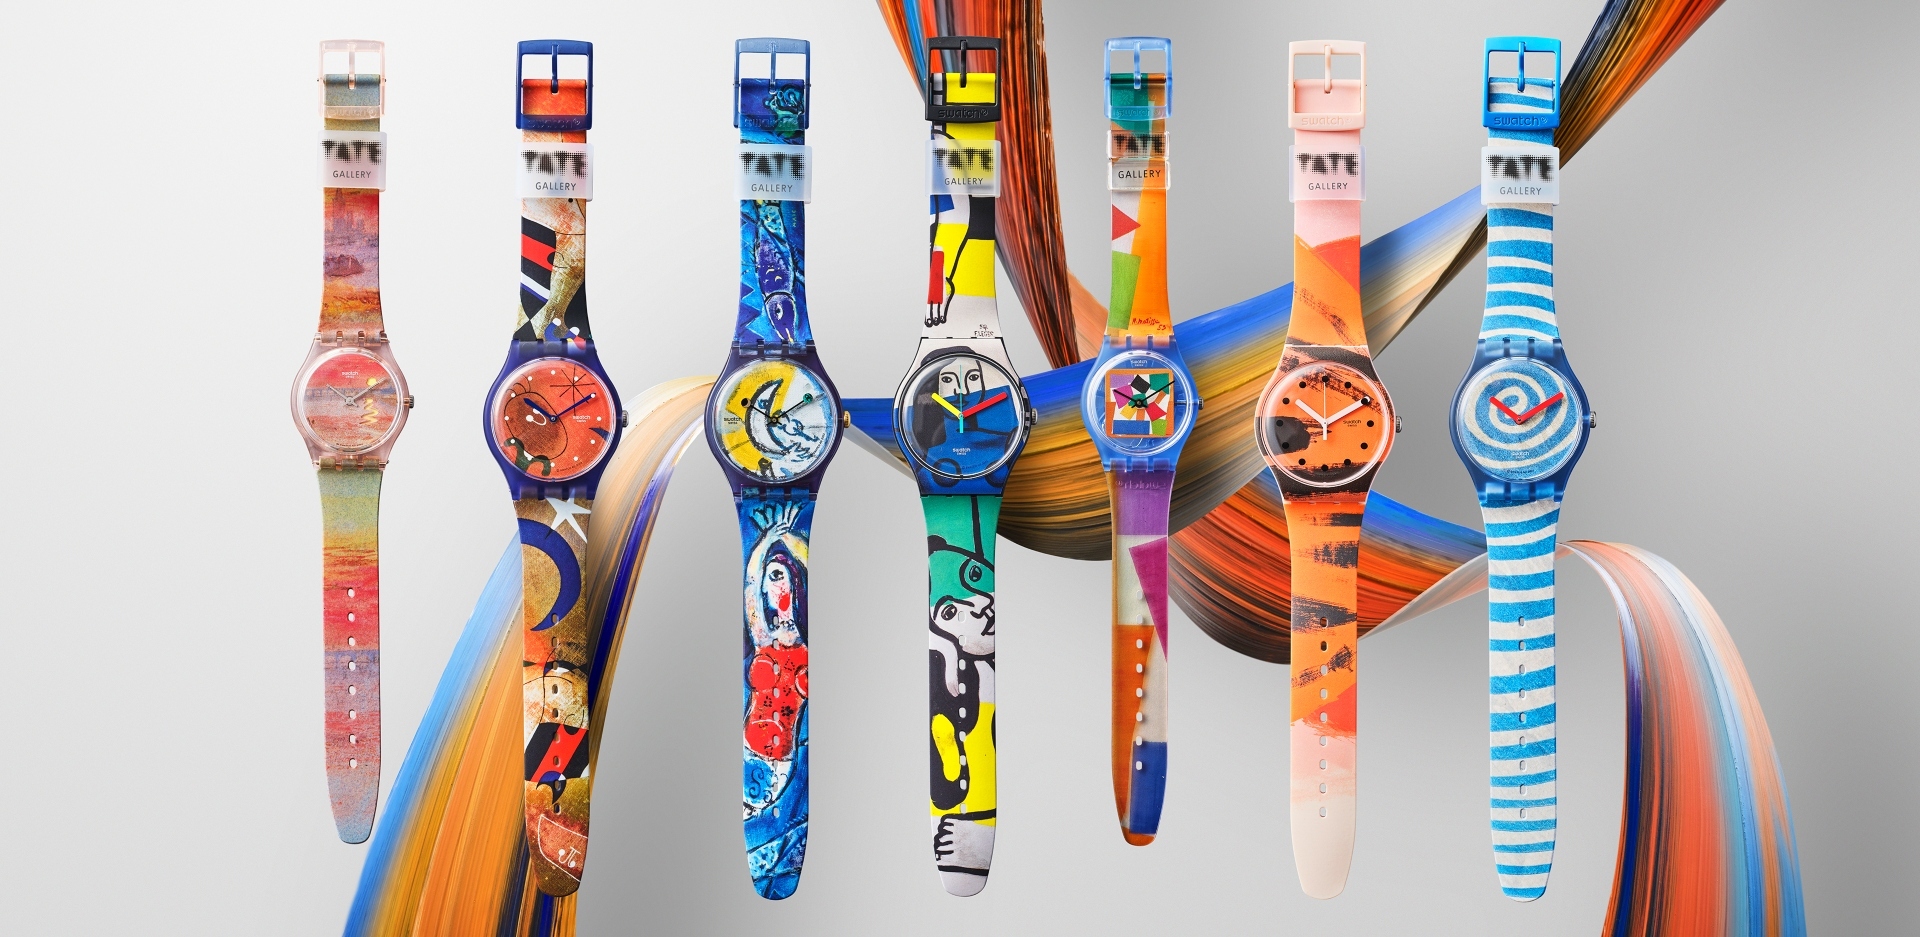 Swatch X Tate Gallery: Η νέα σειρά ρολογιών 